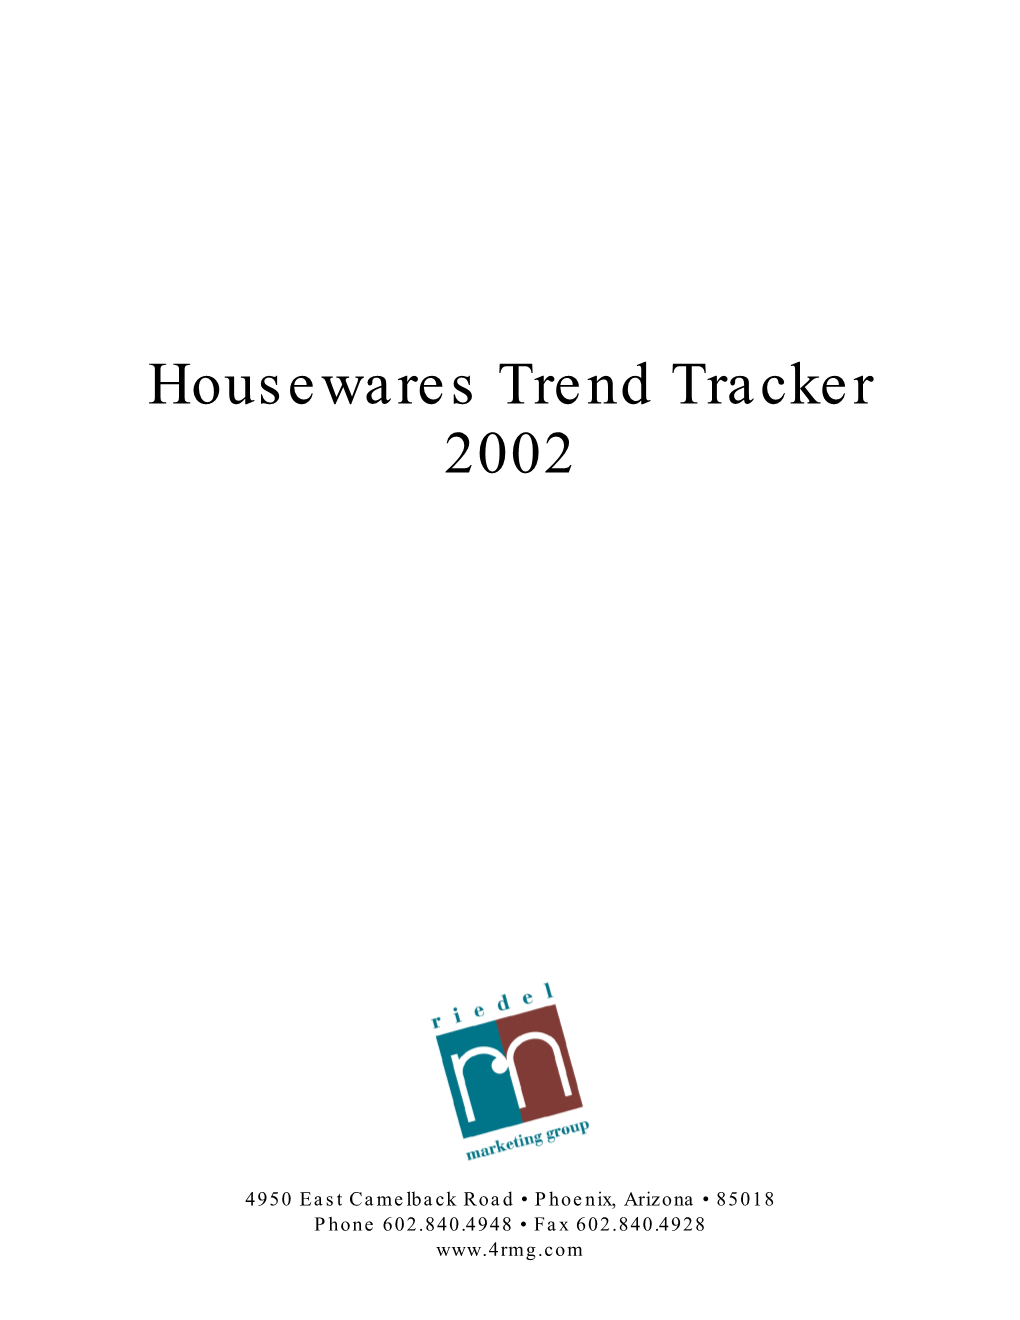 Housewares Trend Tracker 2002